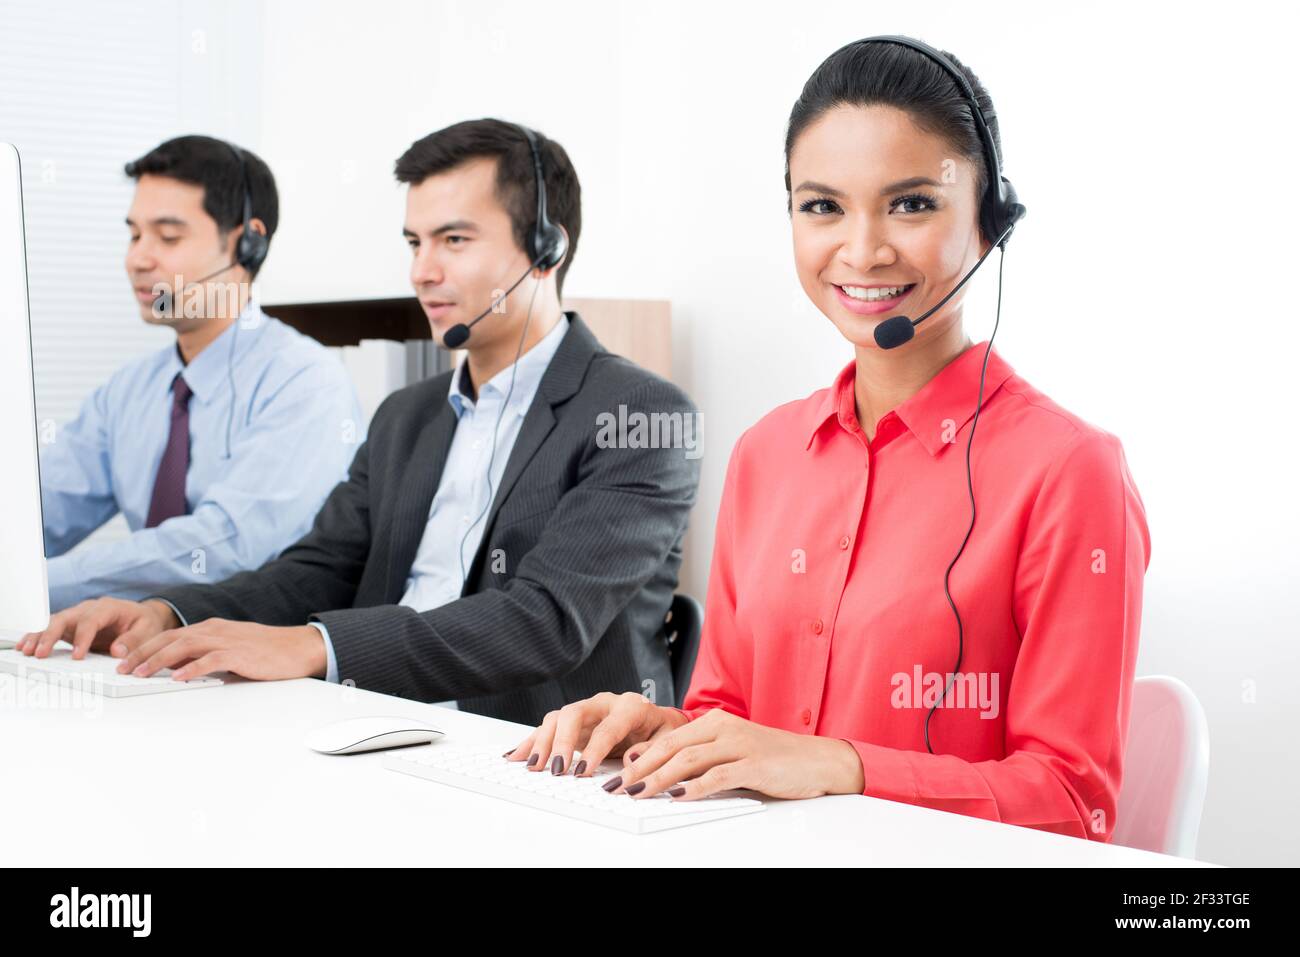 Call center (operator or telemarketer) team Stock Photo